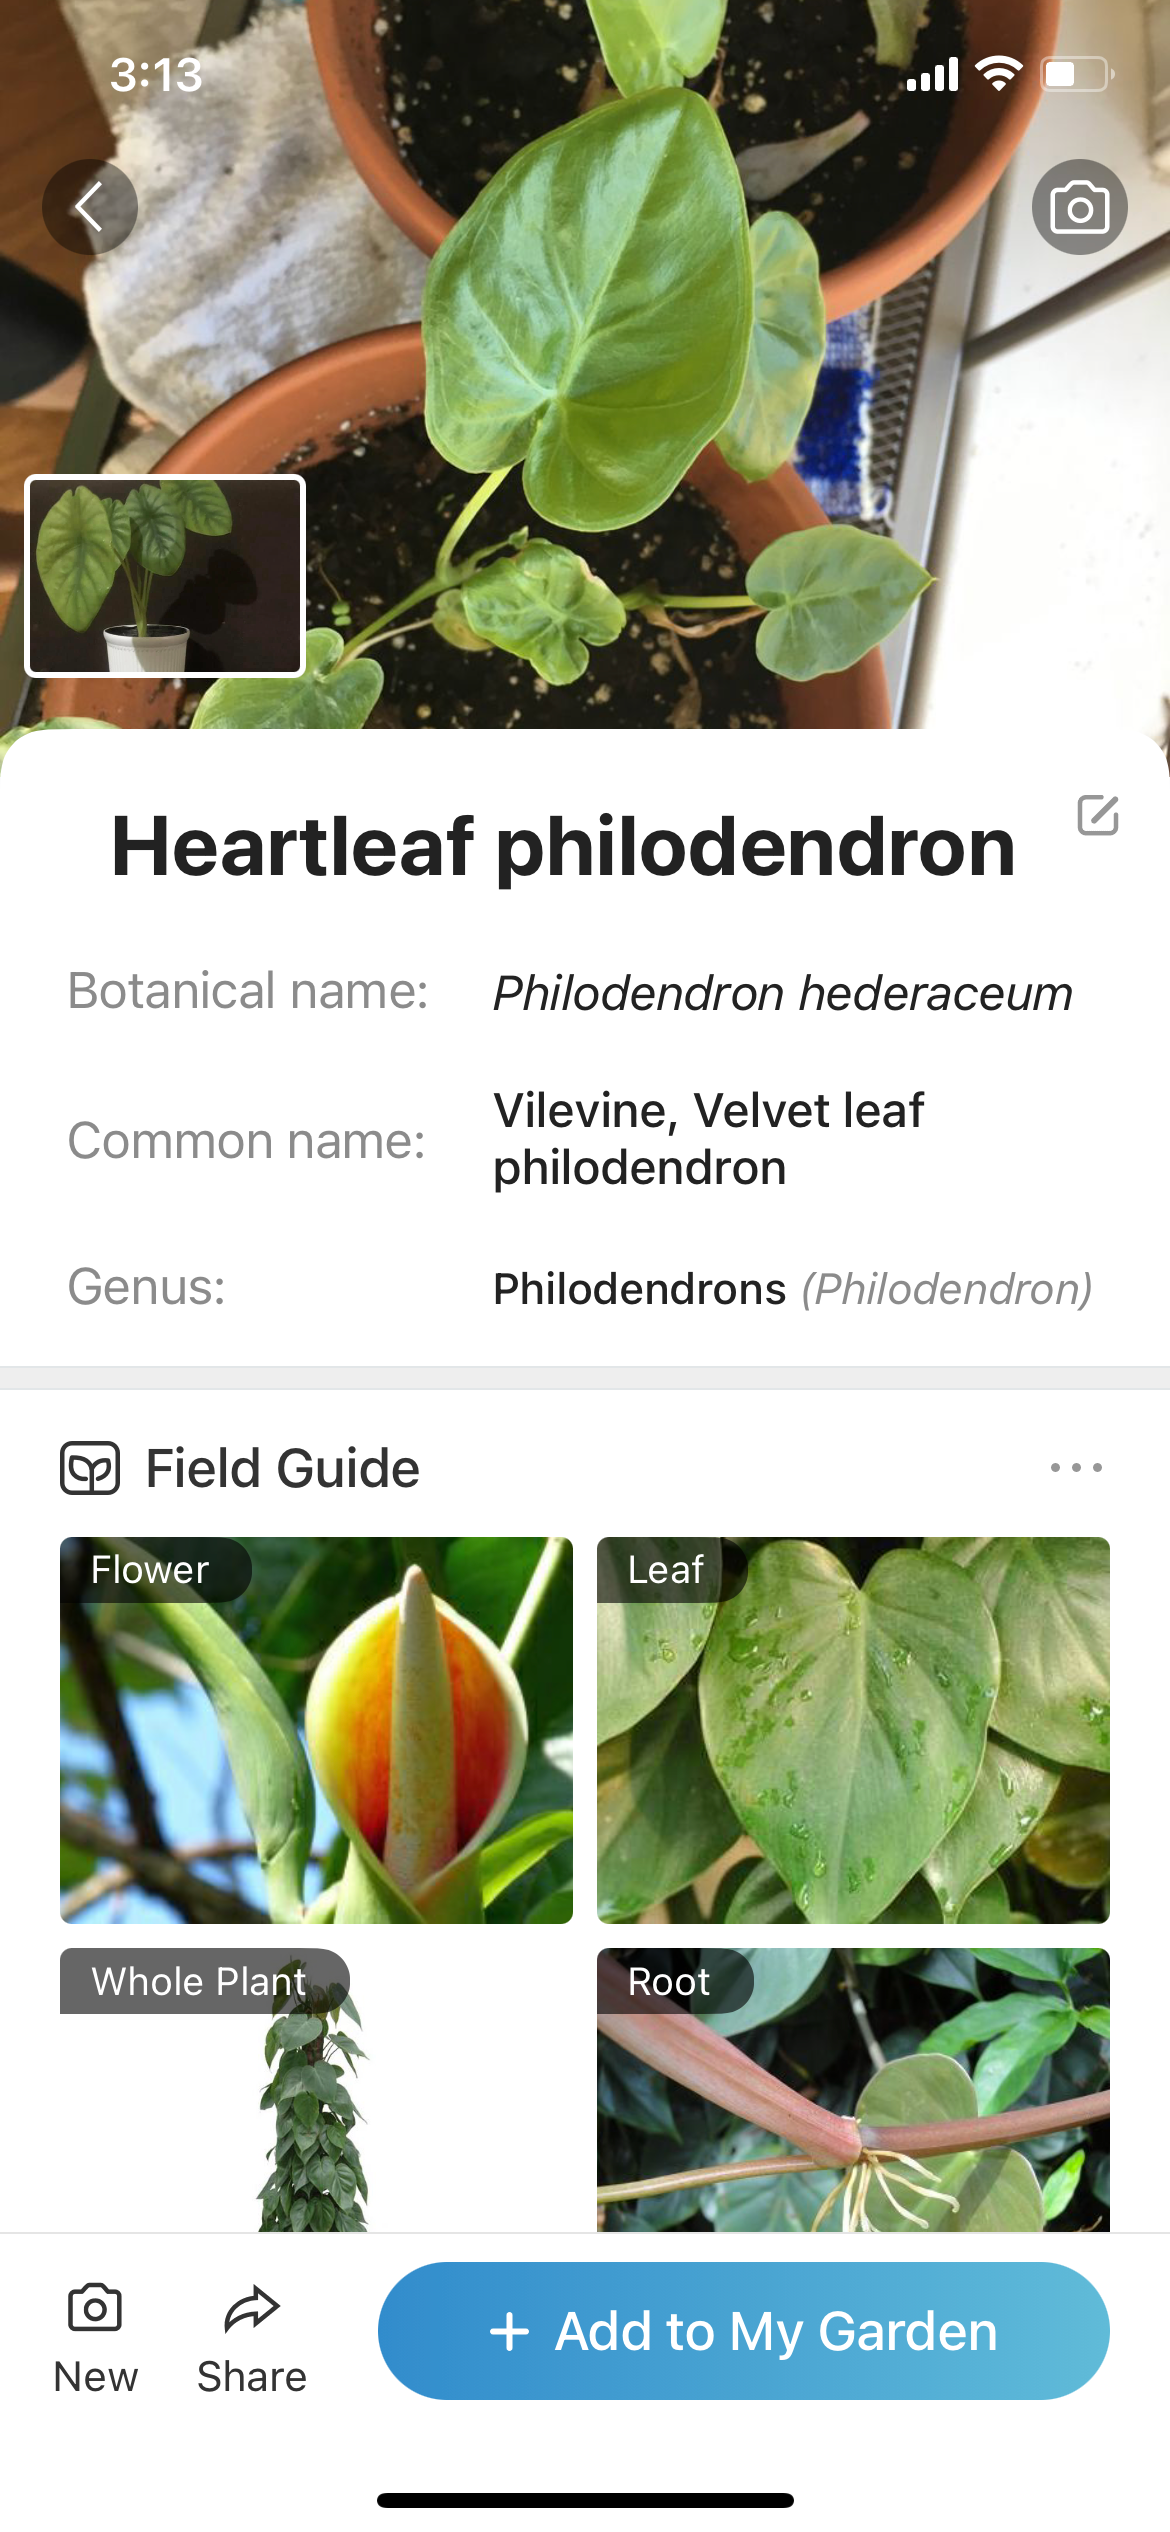 Plant Description in Picture This